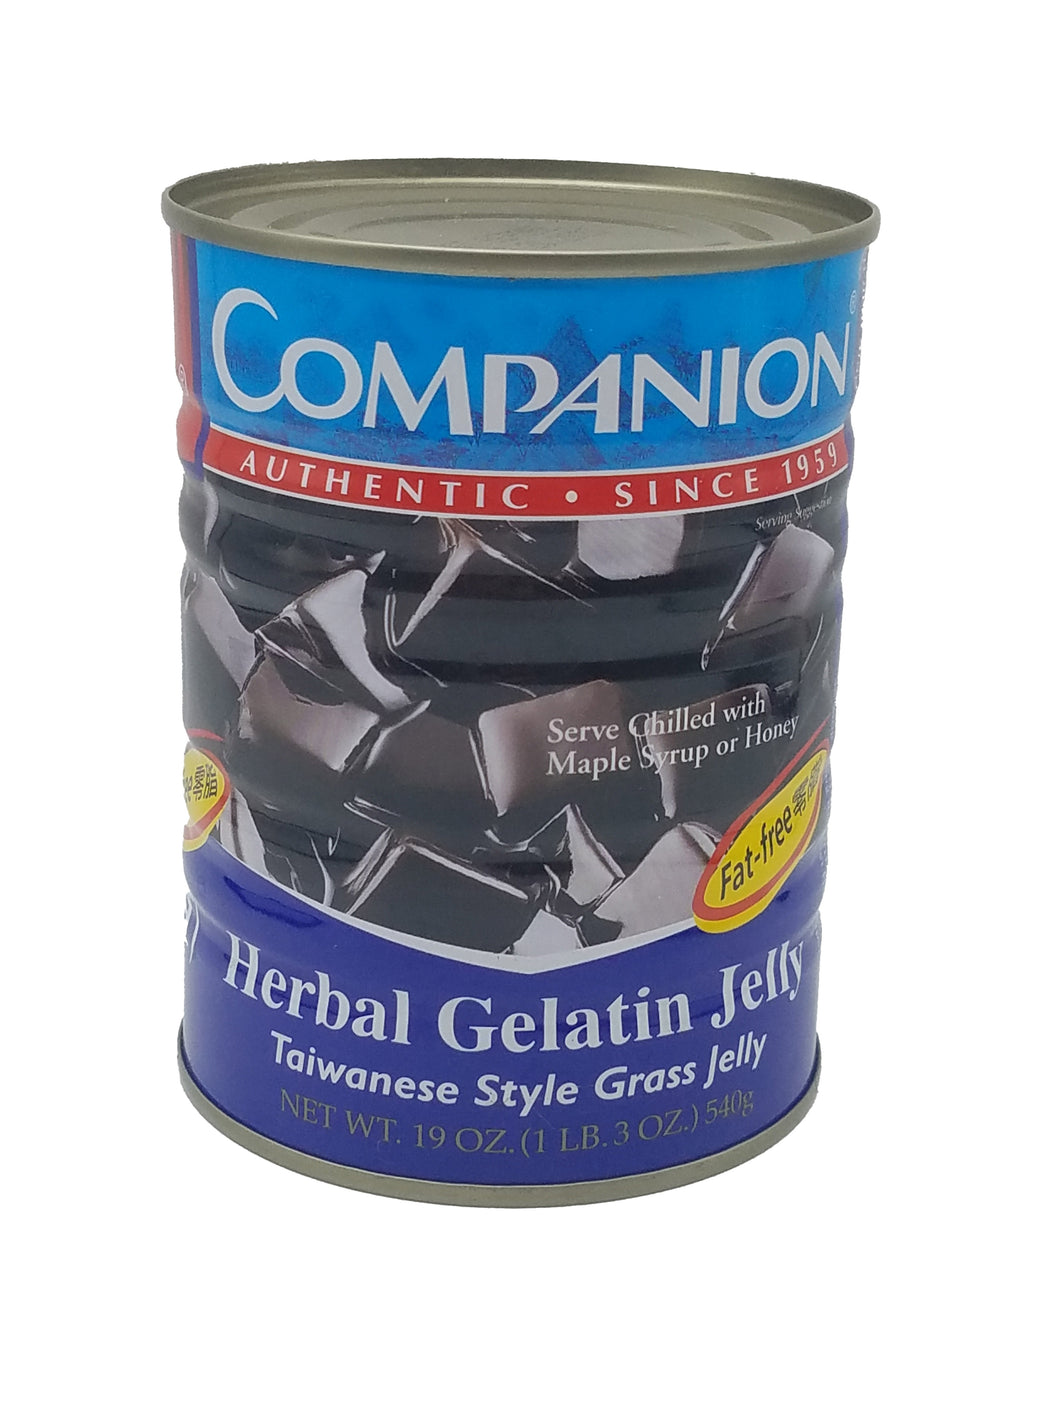 Companion Herbal Gelatin Jelly